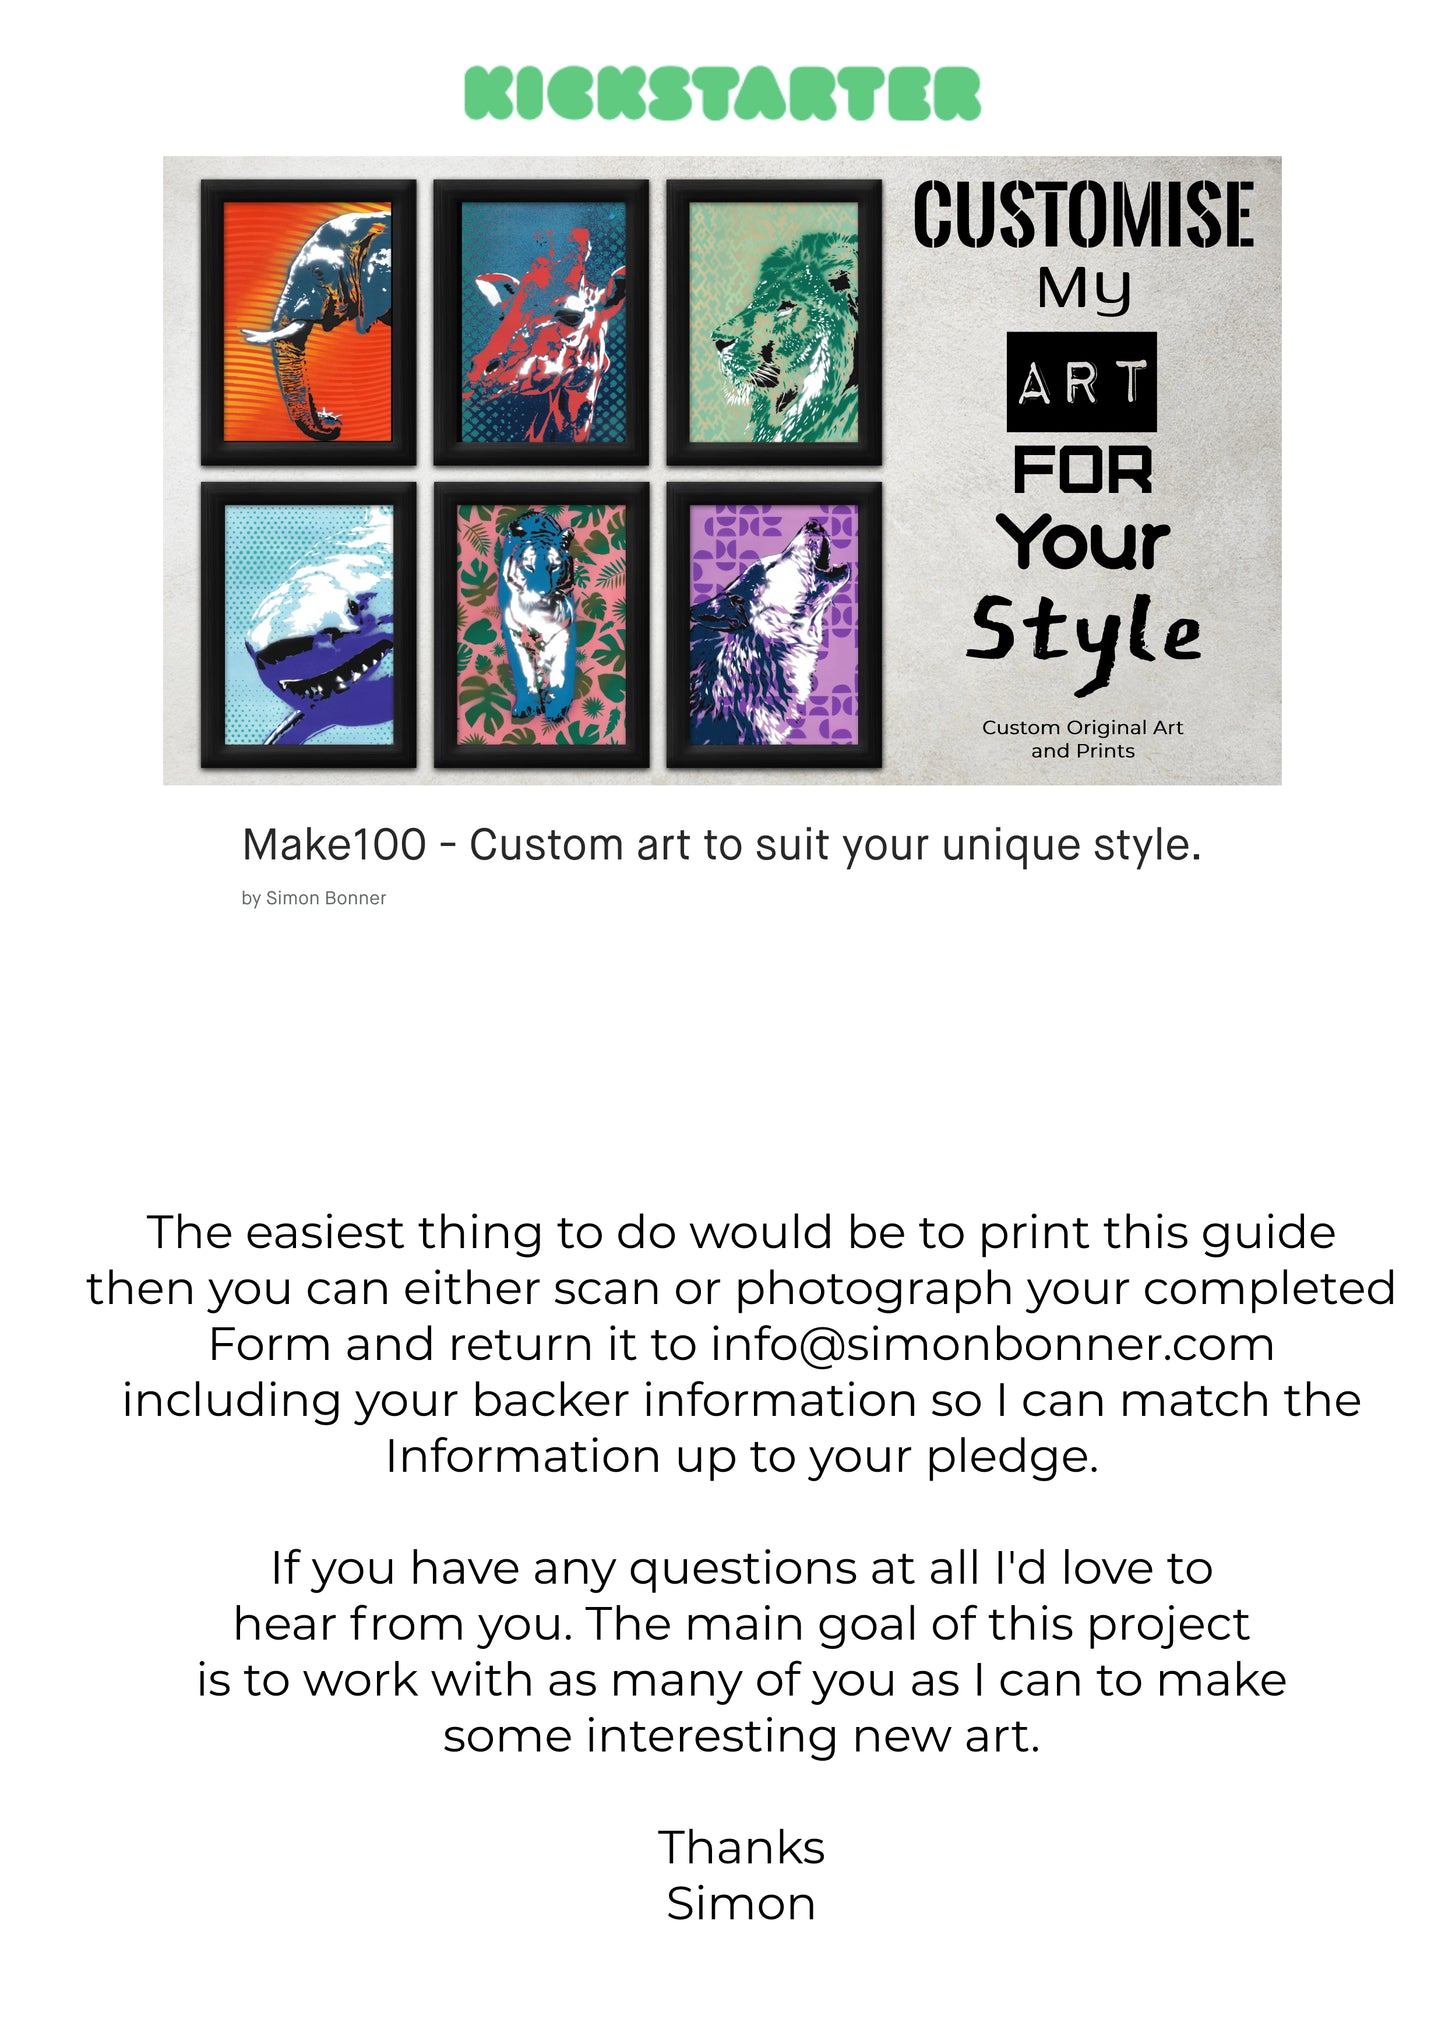 Make100 - Custom art to suit your unique style by Simon Bonner. - Project Guide